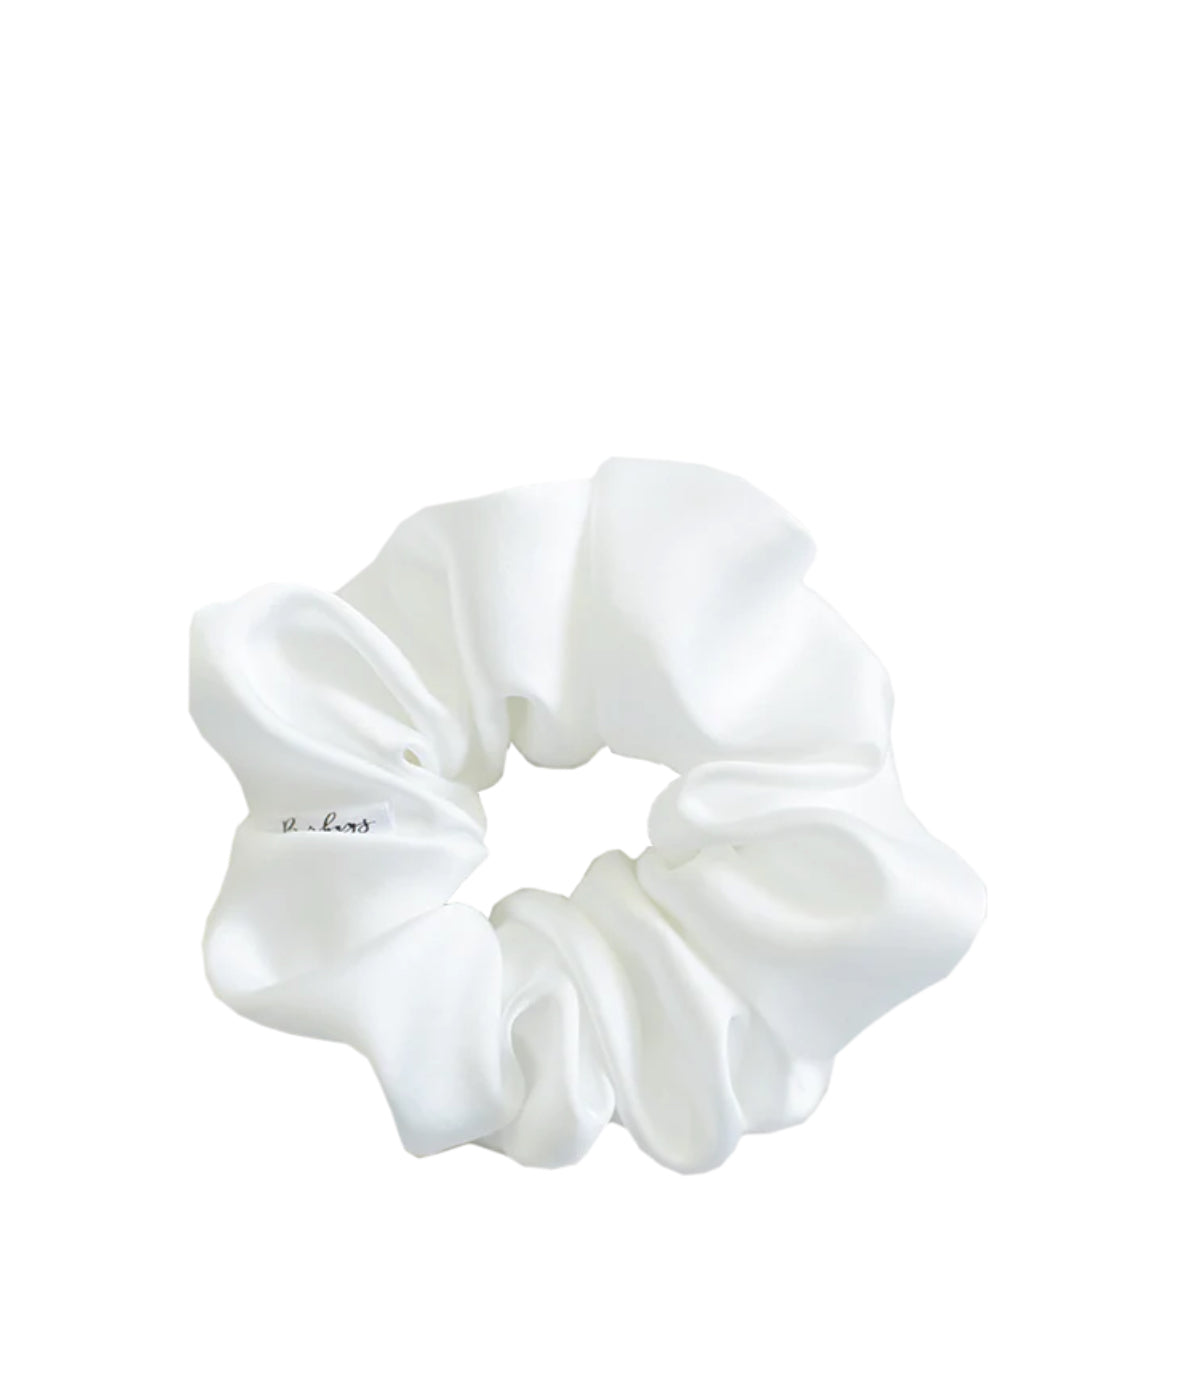 Barbays Scrunchie in White “Vow” Satin